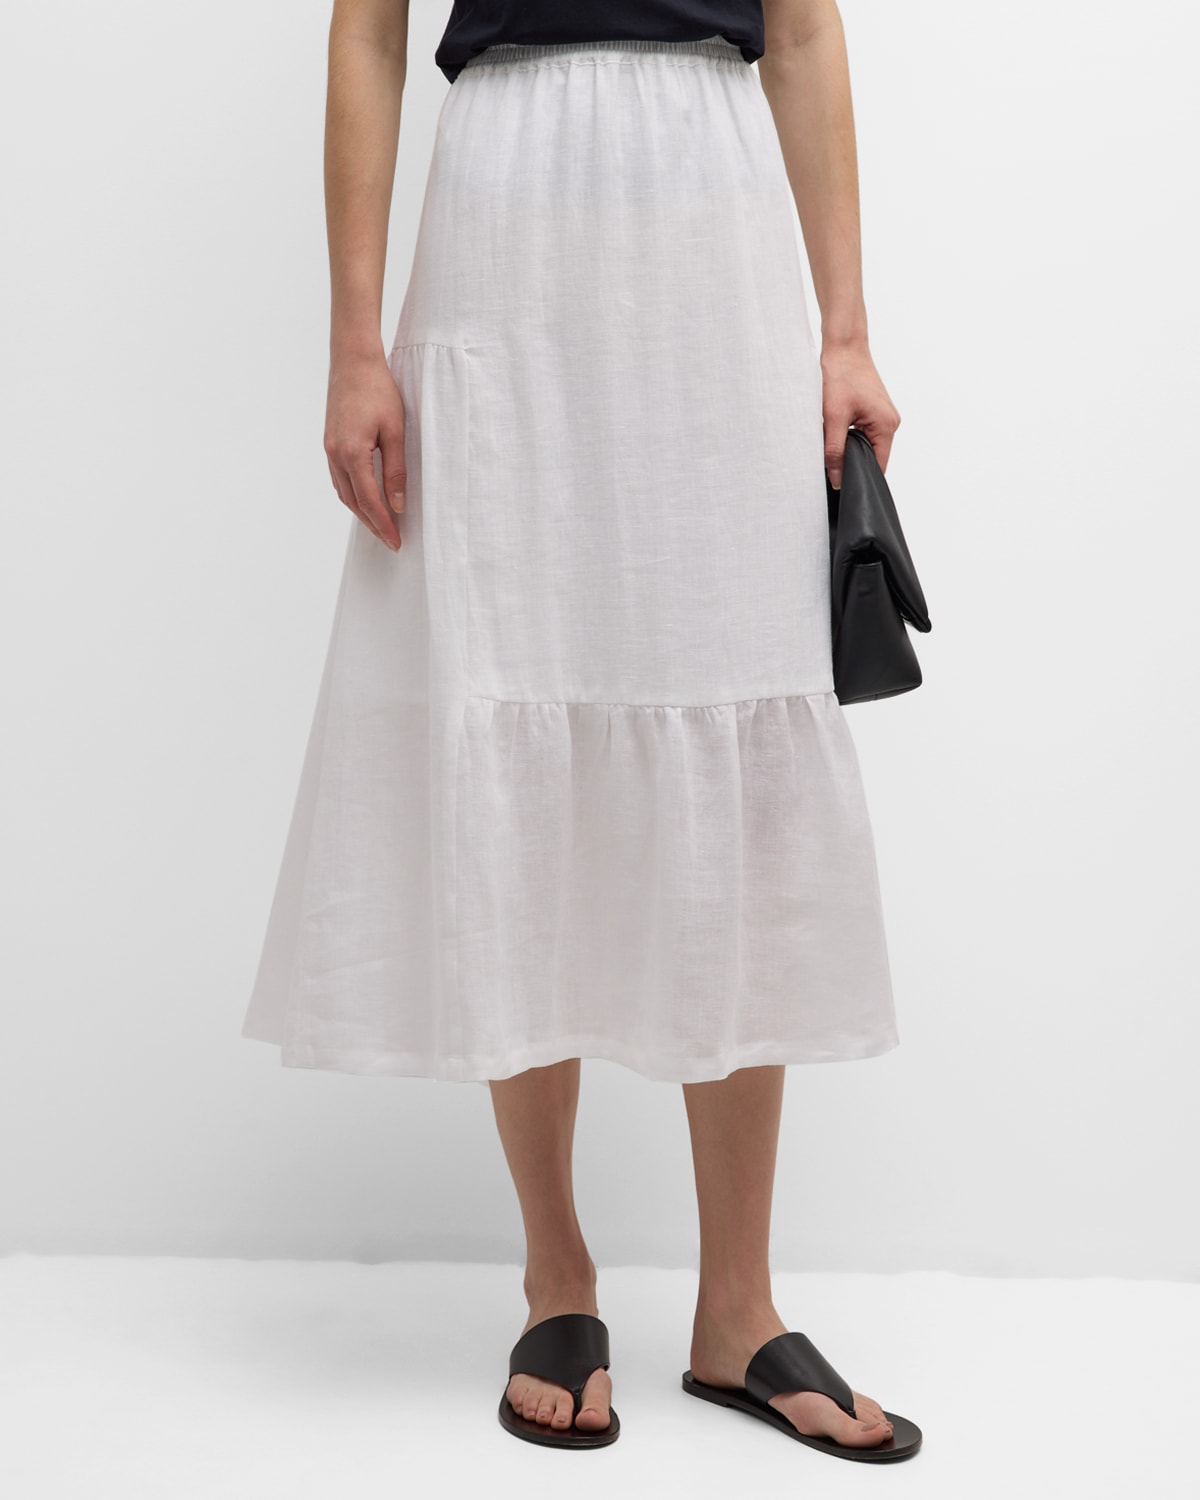 Tiered Petticoat Skirt